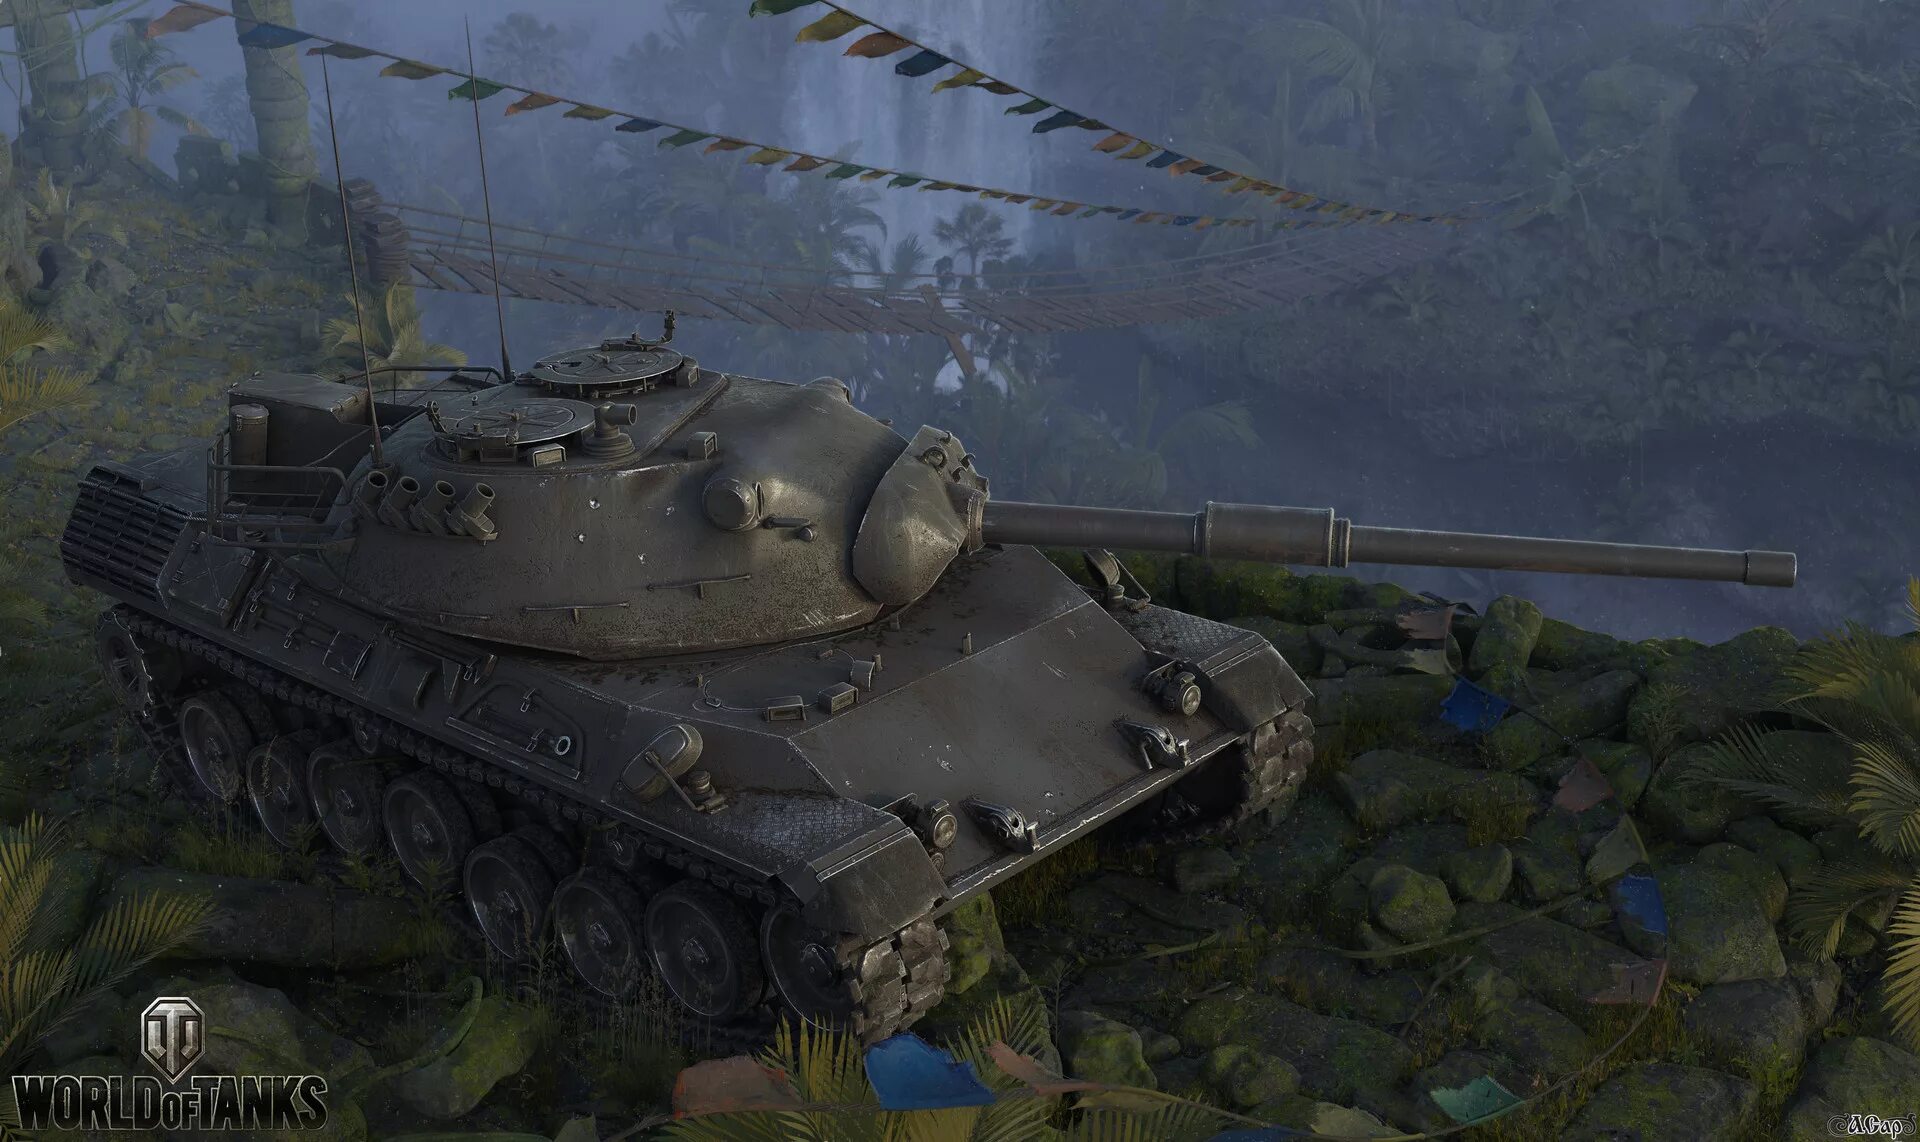 Первый ворлд. Леопард 1 World of Tanks. Леопард танк ворлд оф танк. Танк Leopard 1. Танк леопард 1 ворлд оф танкс.